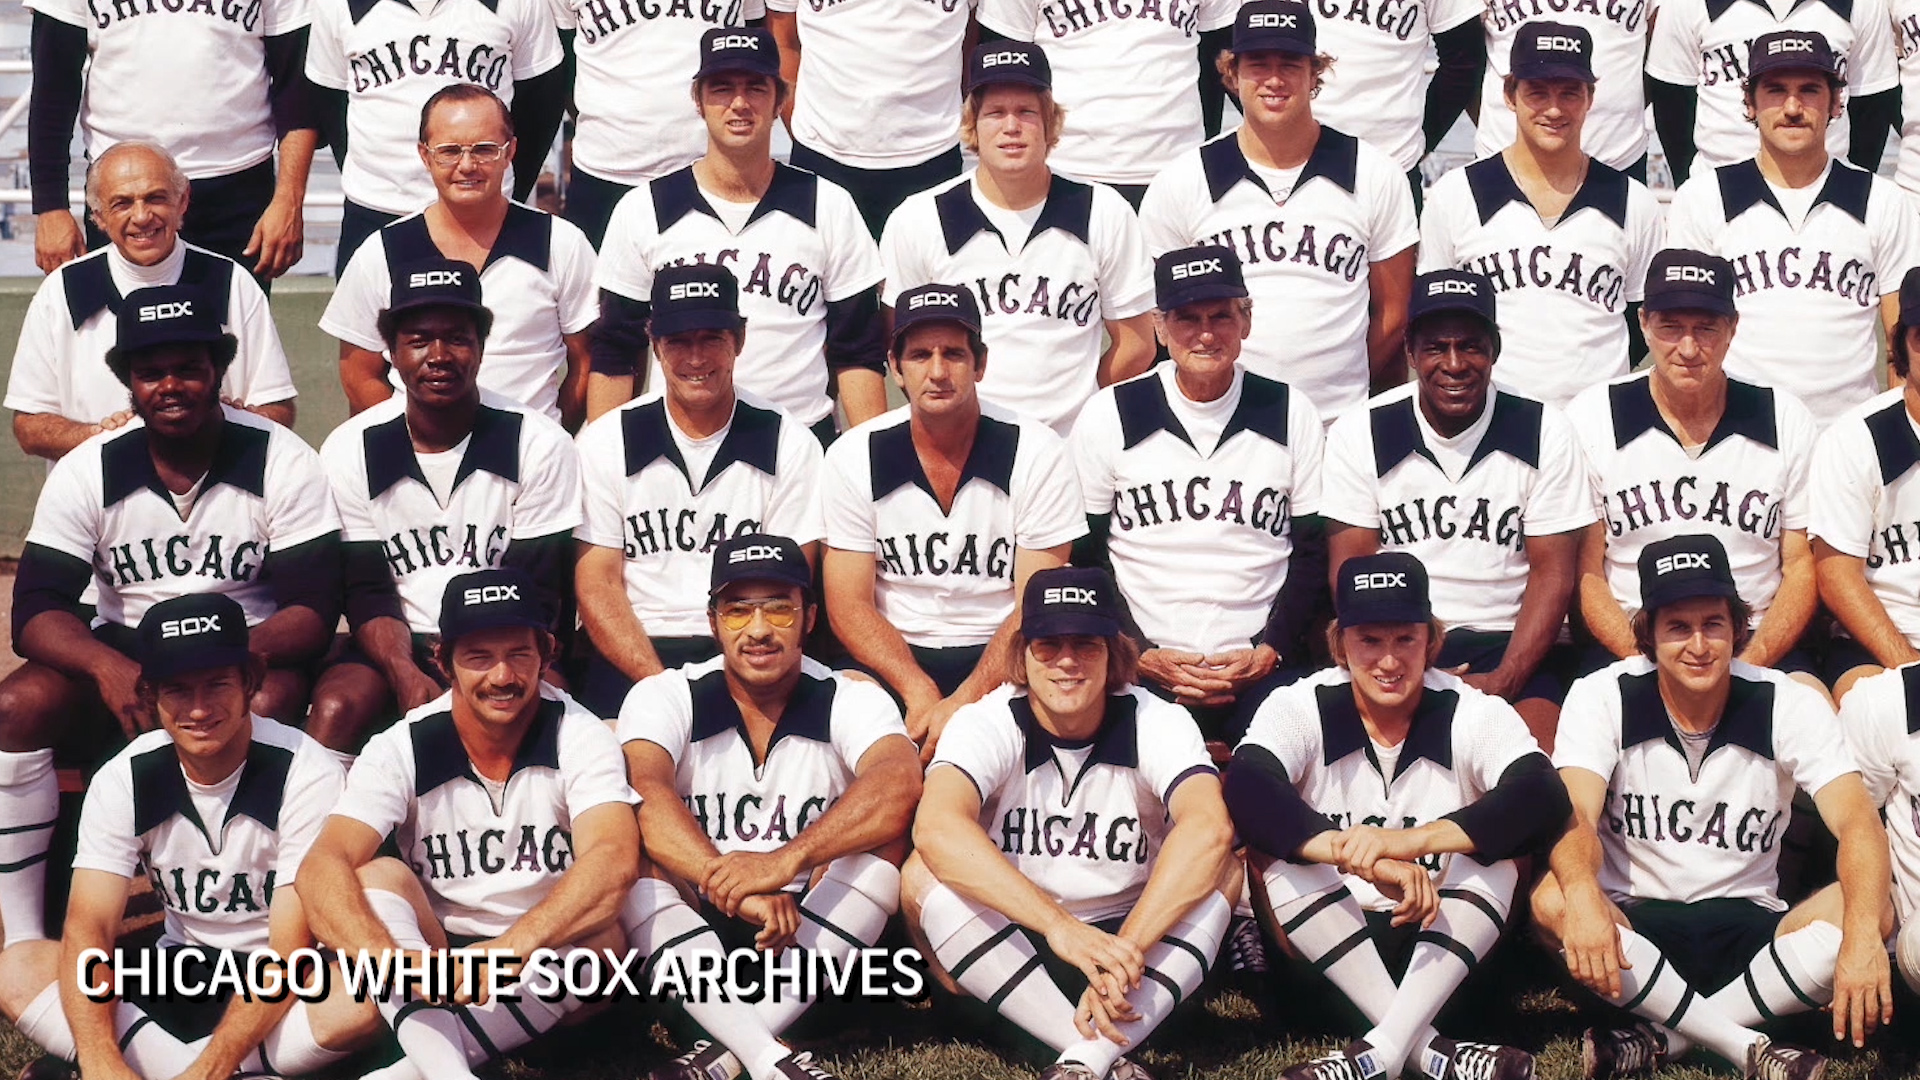 White Sox, Short Pants: Chicago's Infamous Uniforms Turn 38